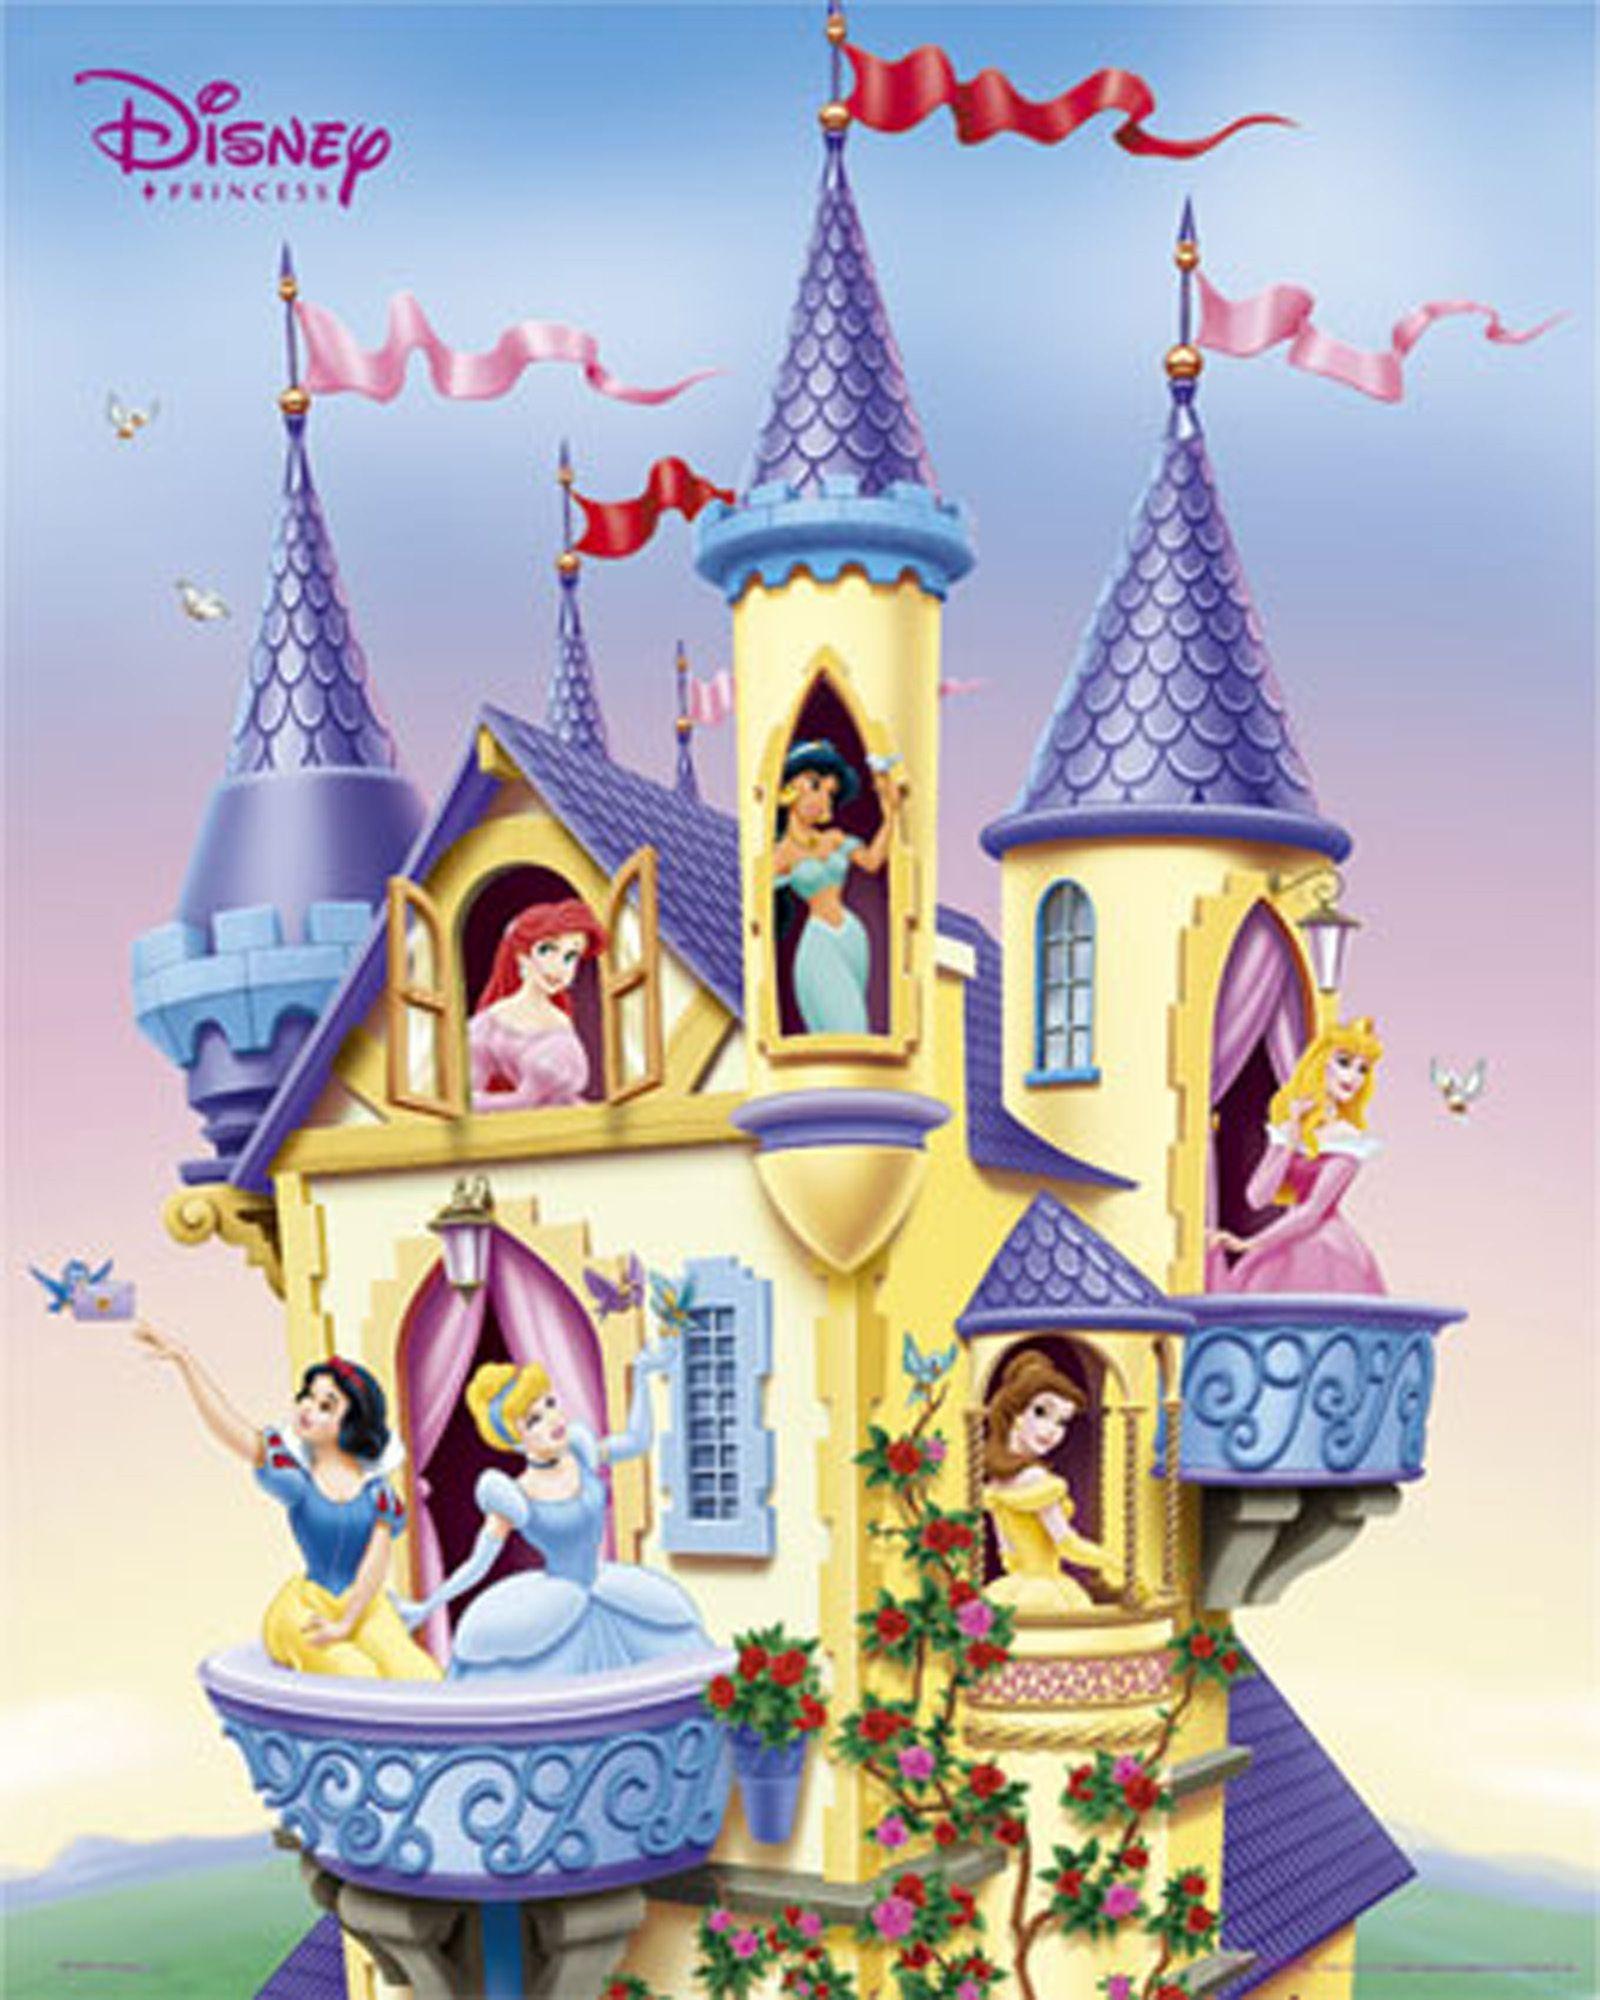 Princesses in Castle Princess Photo